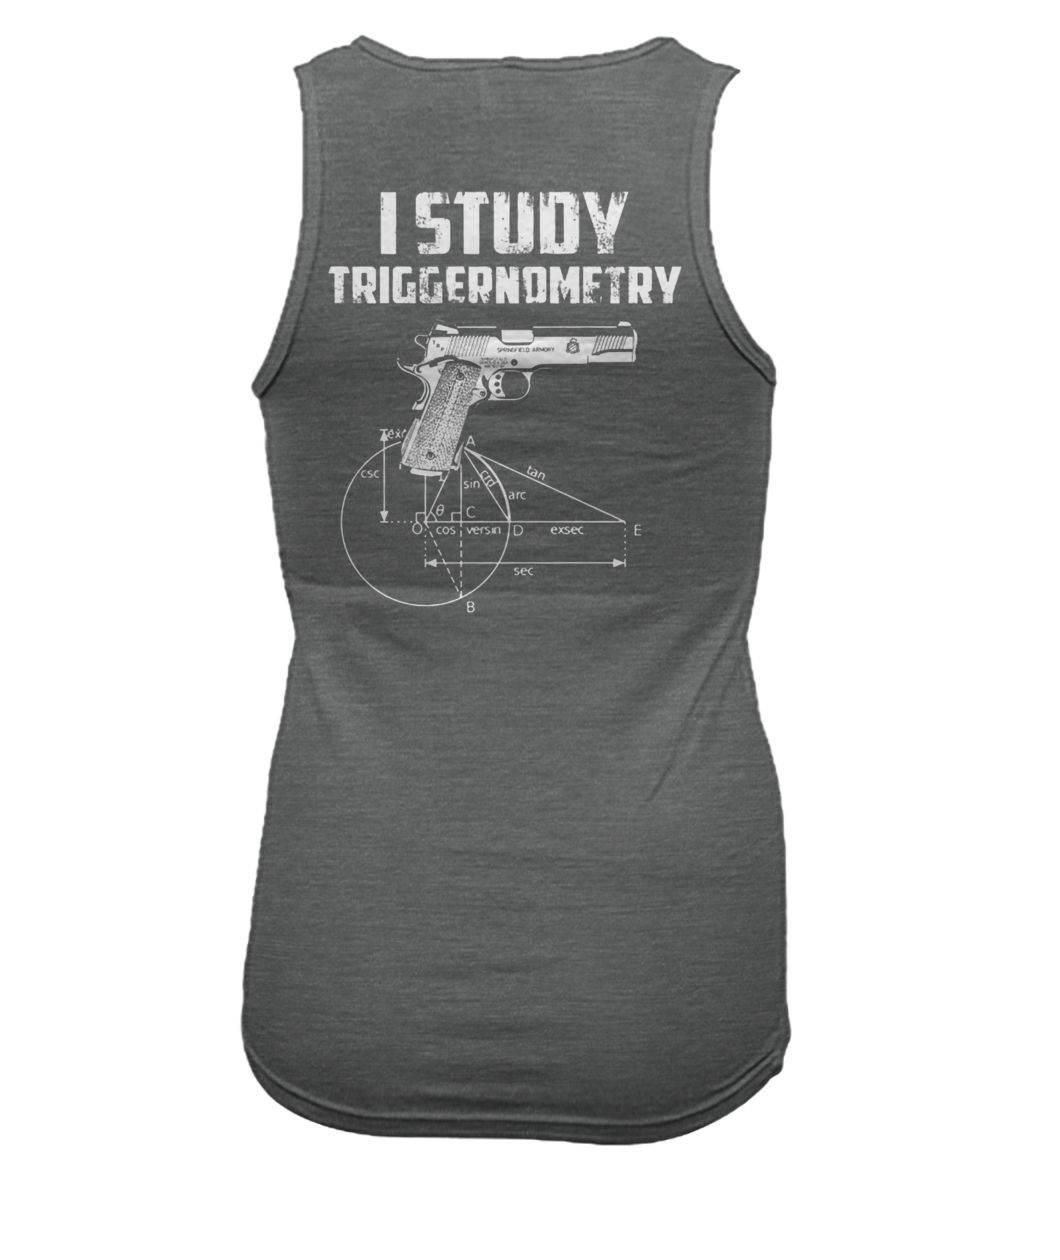 I study triggernometry women's tank top